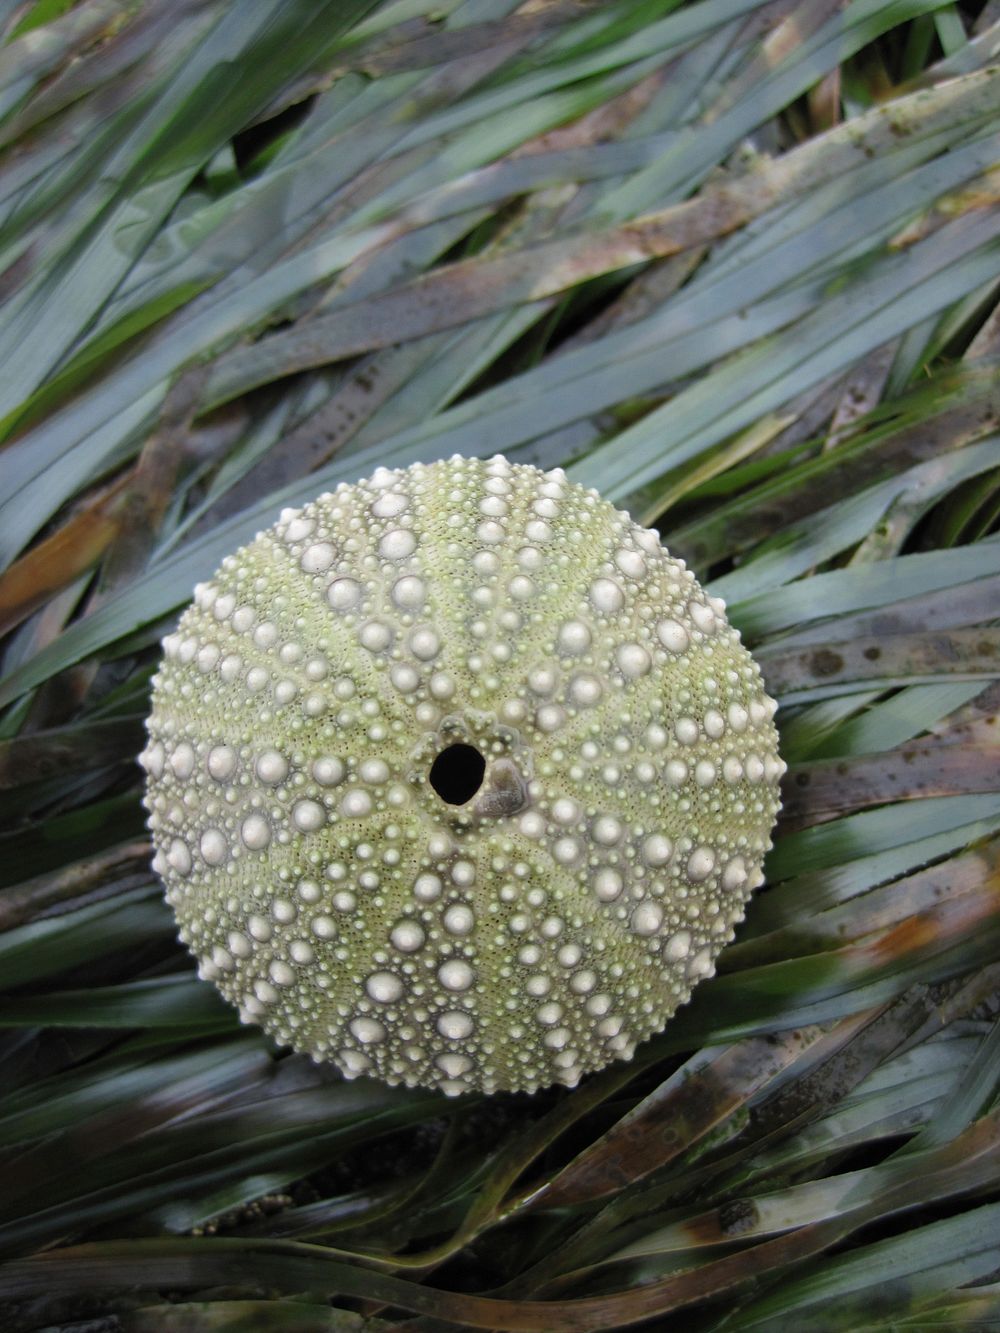 Sea urchin seagrasses. Original public domain image from Flickr